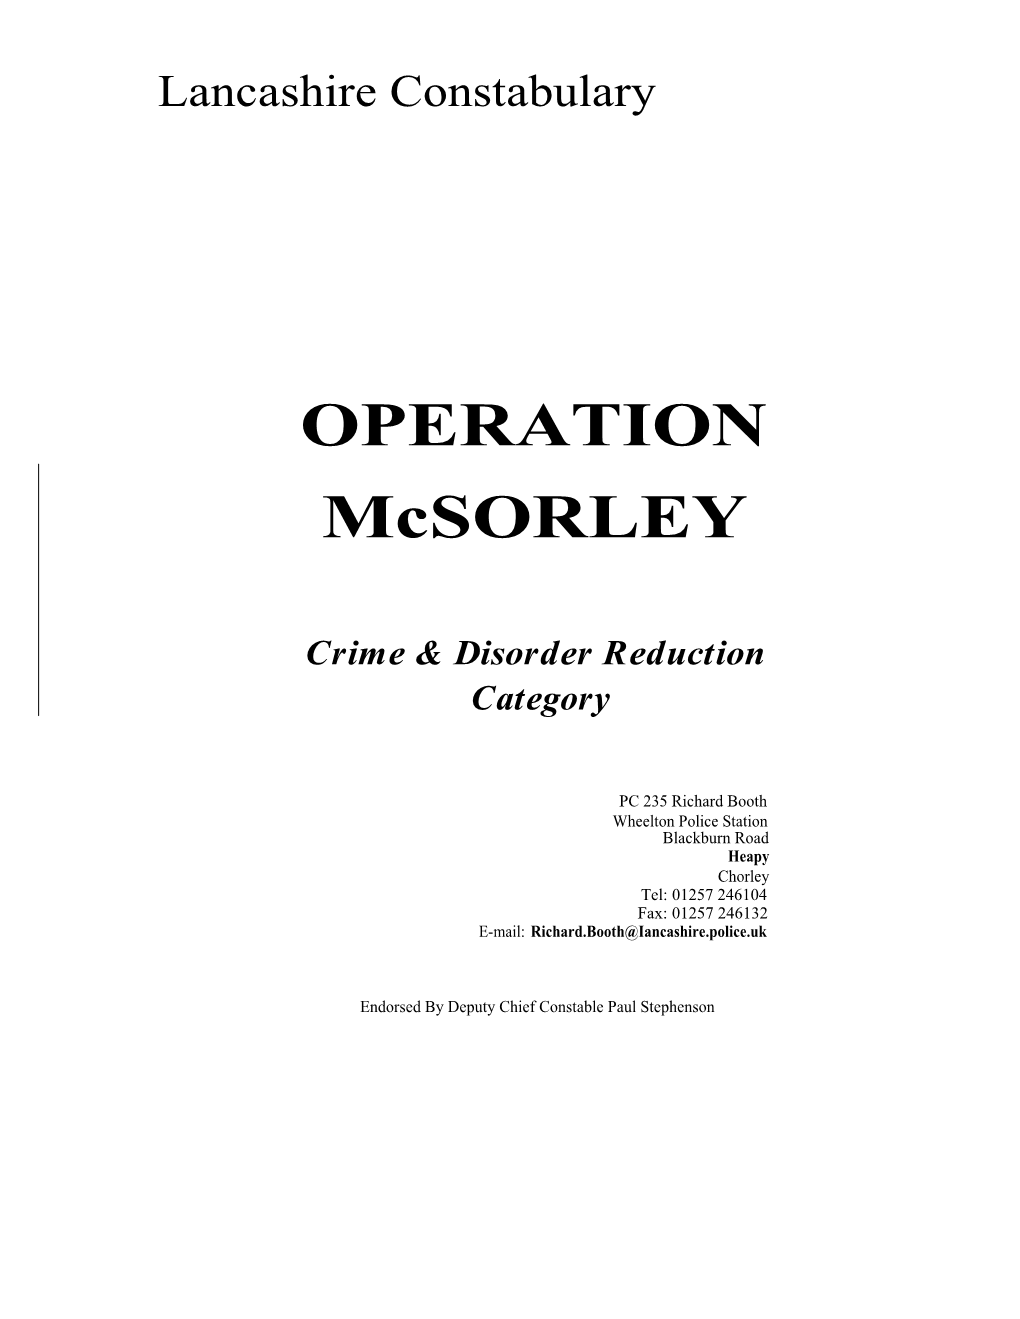 OPERATION Mcsorley